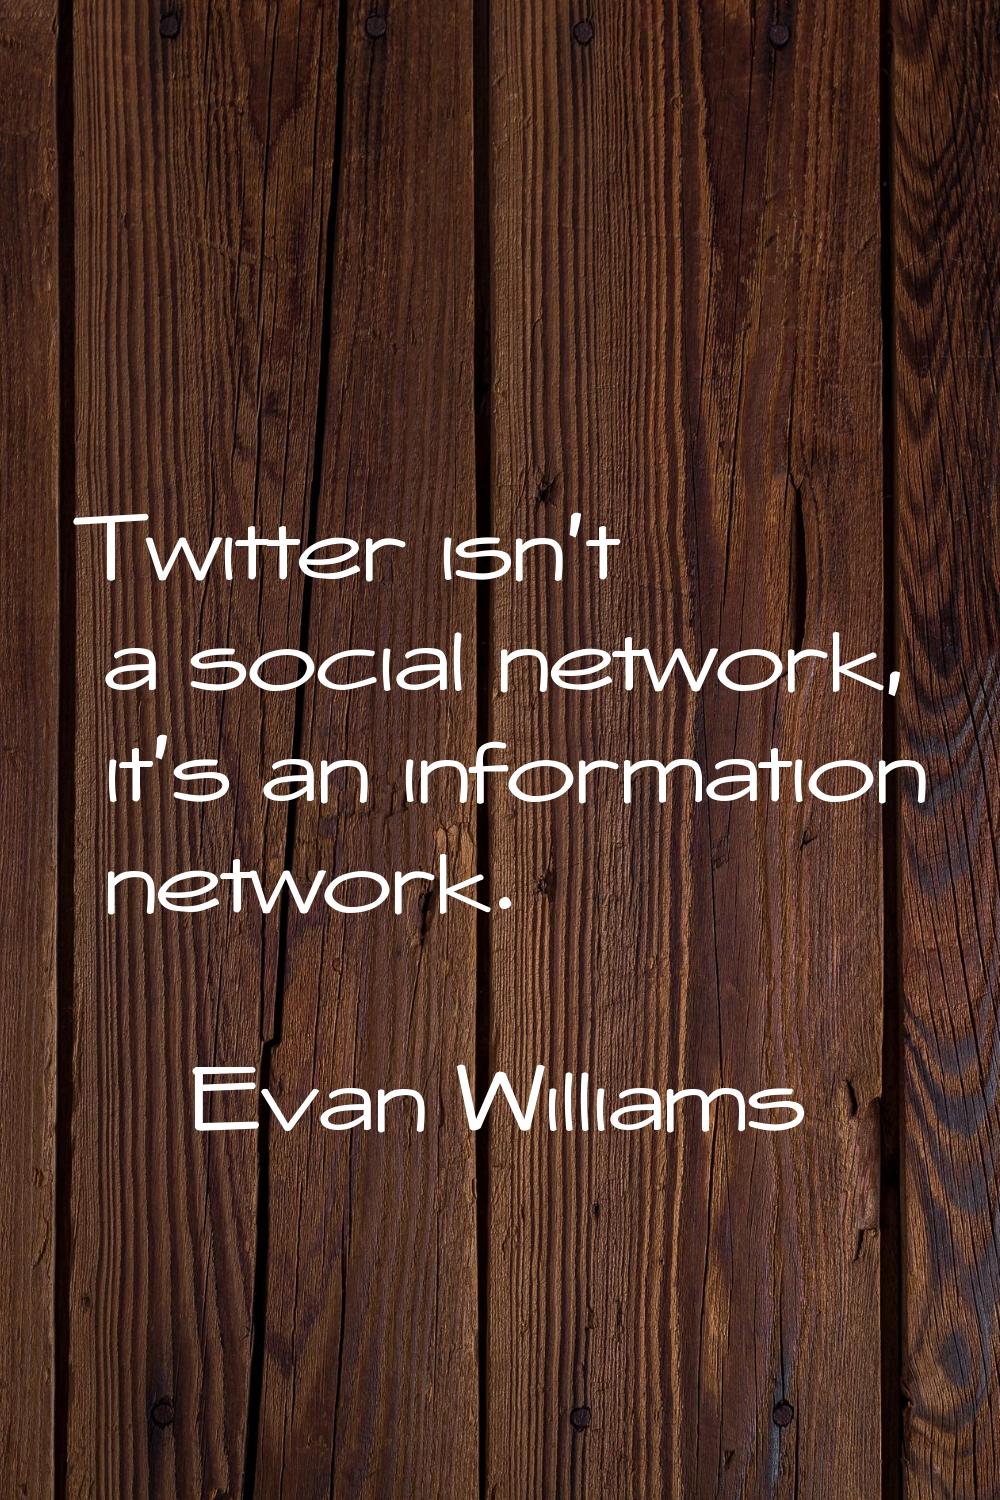 Twitter isn't a social network, it's an information network.